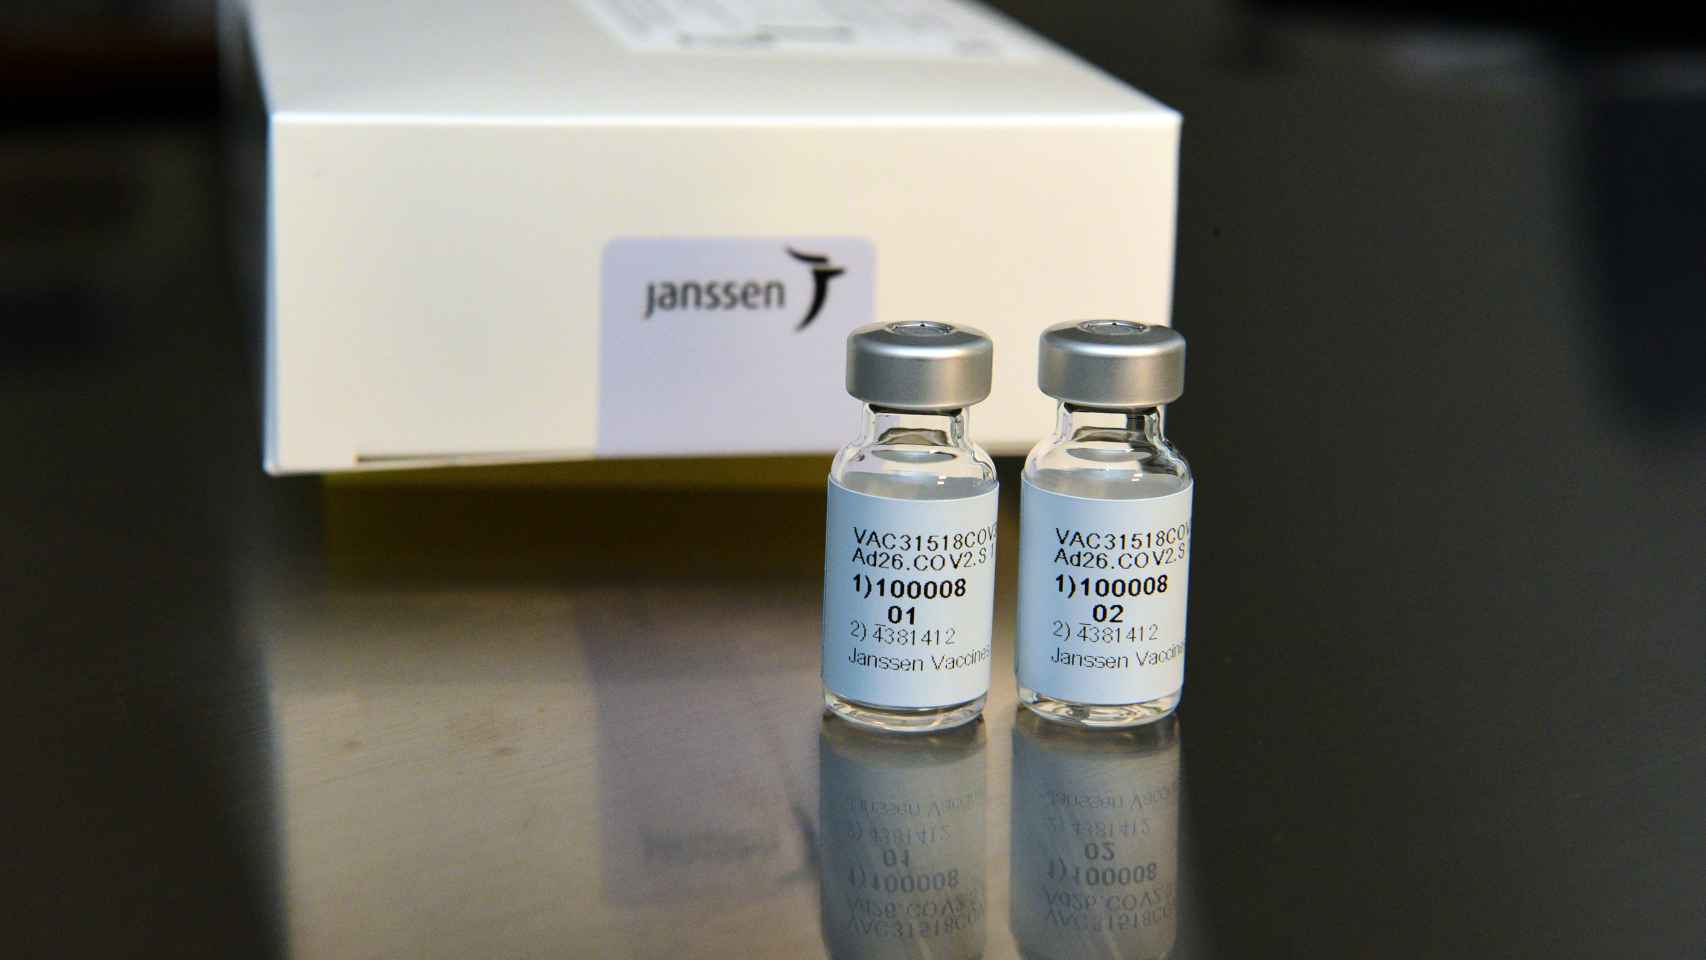 Johnson & Johnson's Janssen COVID-19 vaccine